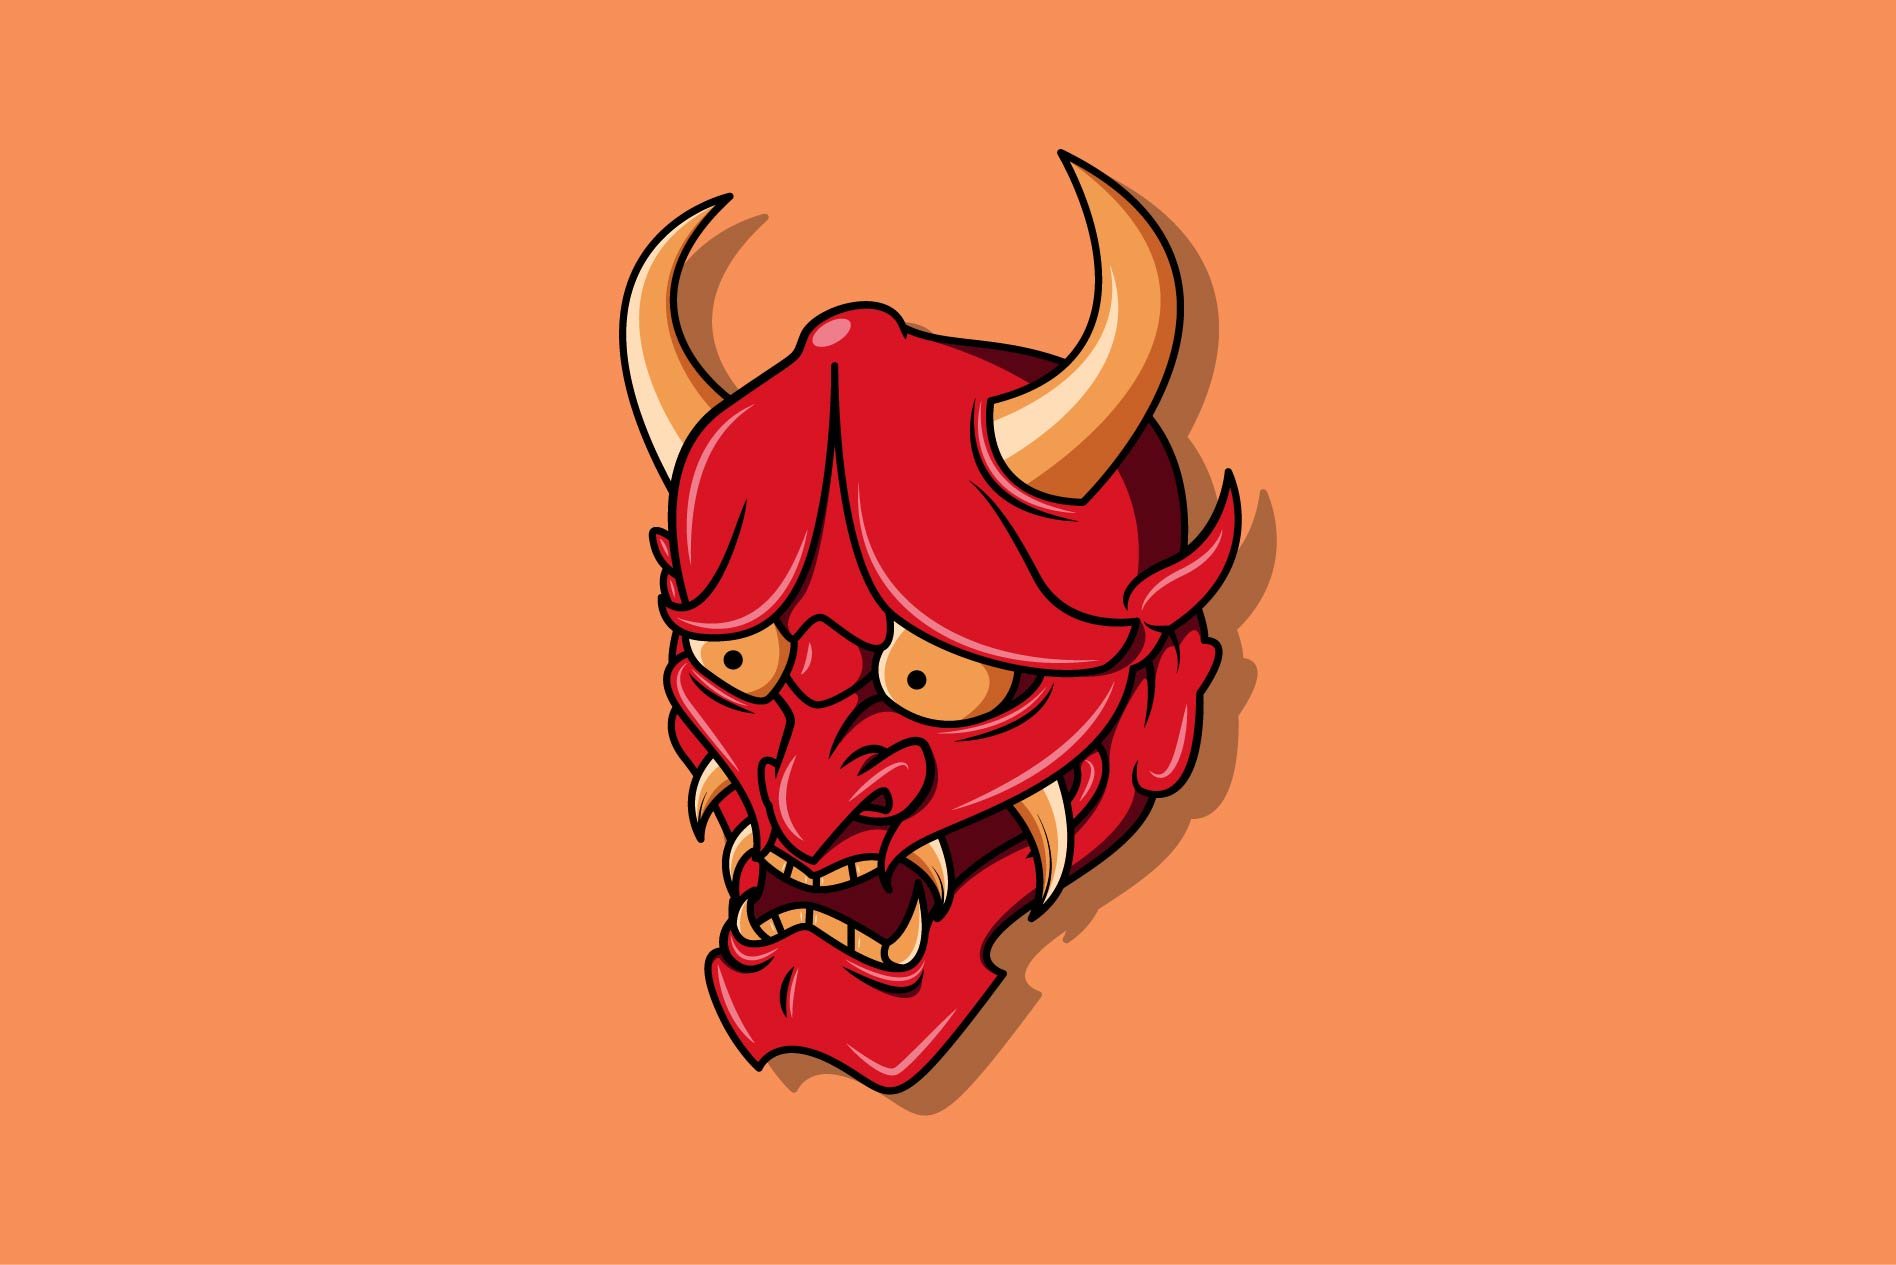 Oni japanese devil mask #25 cover image.